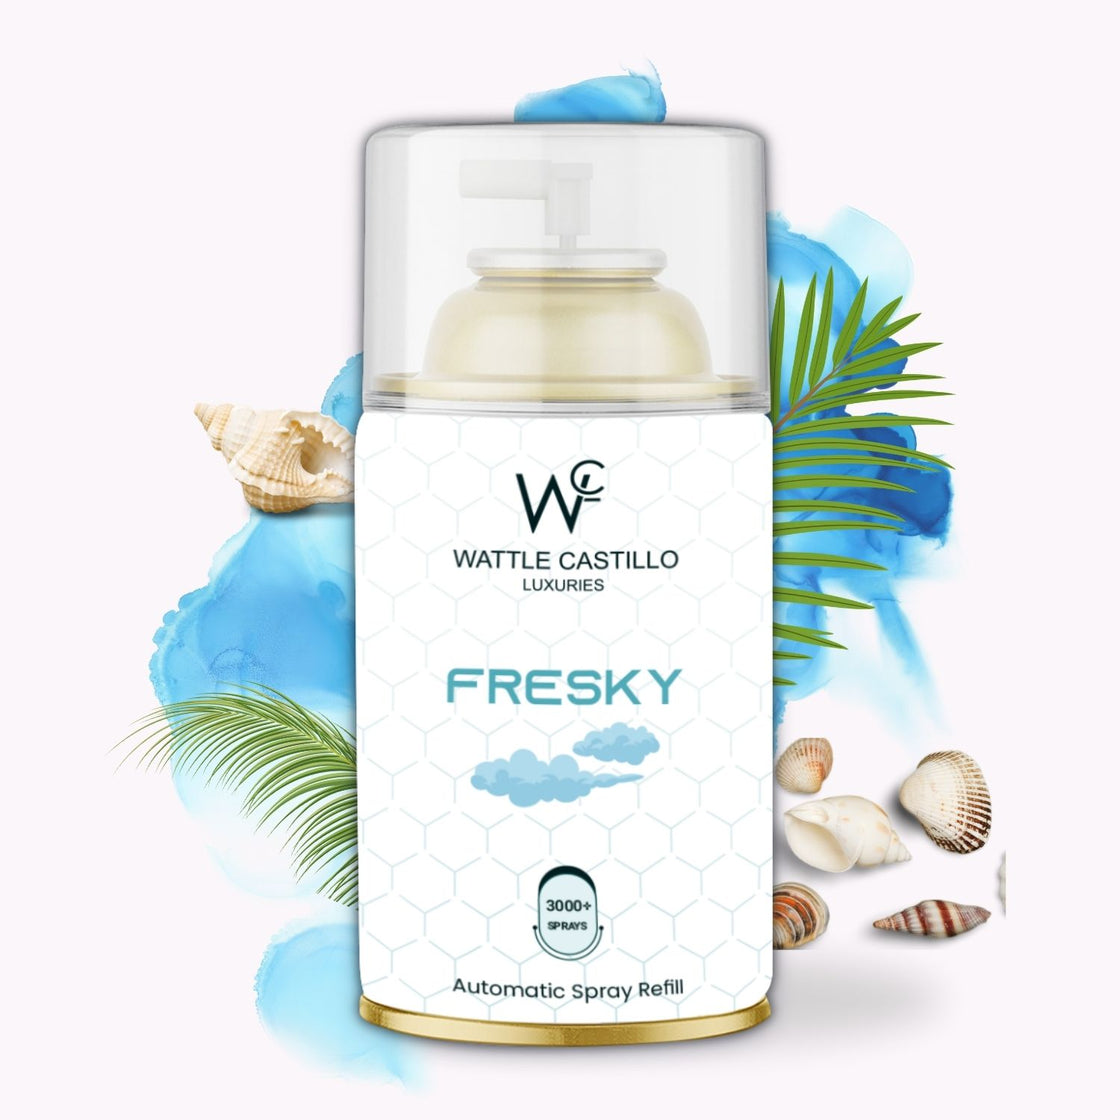 Wattle castillo Fresky Automatic Room Fresheners Refill (2ml) & 3000+ Sprays Guaranteed Lasts up to 80 days